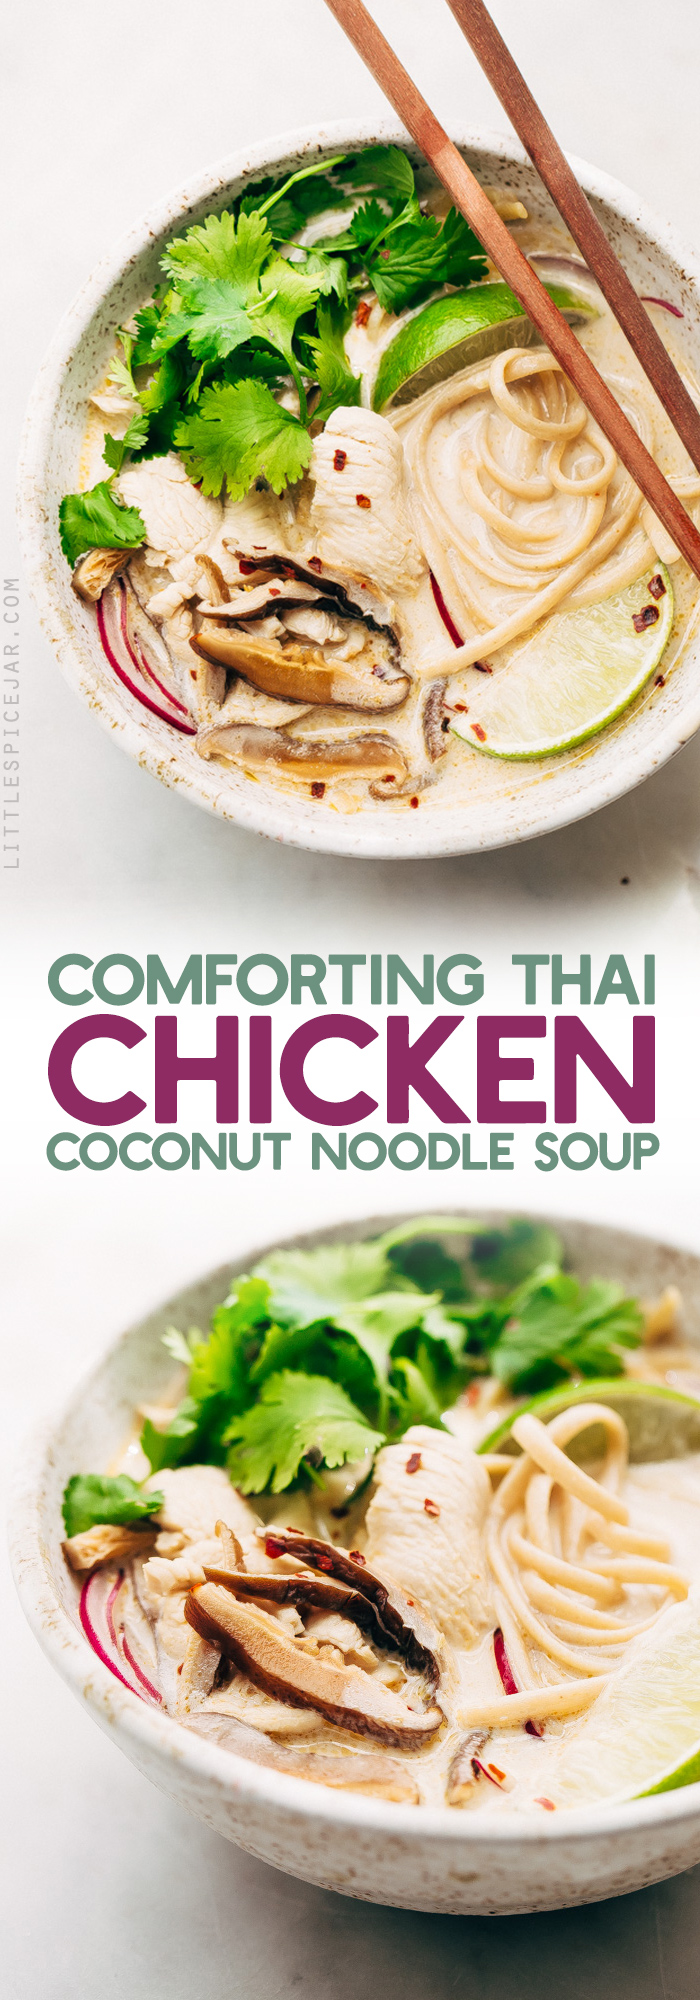 Creamy Comforting Chicken Coconut Noodle Soup - A Tom Kha Gai soup meets an American classic - chicken noodle. This soup is rich and comforting! #tomkhagai #thaisoup #coconutnoodlesoup #chickennoodlesoup | Littlespicejar.com